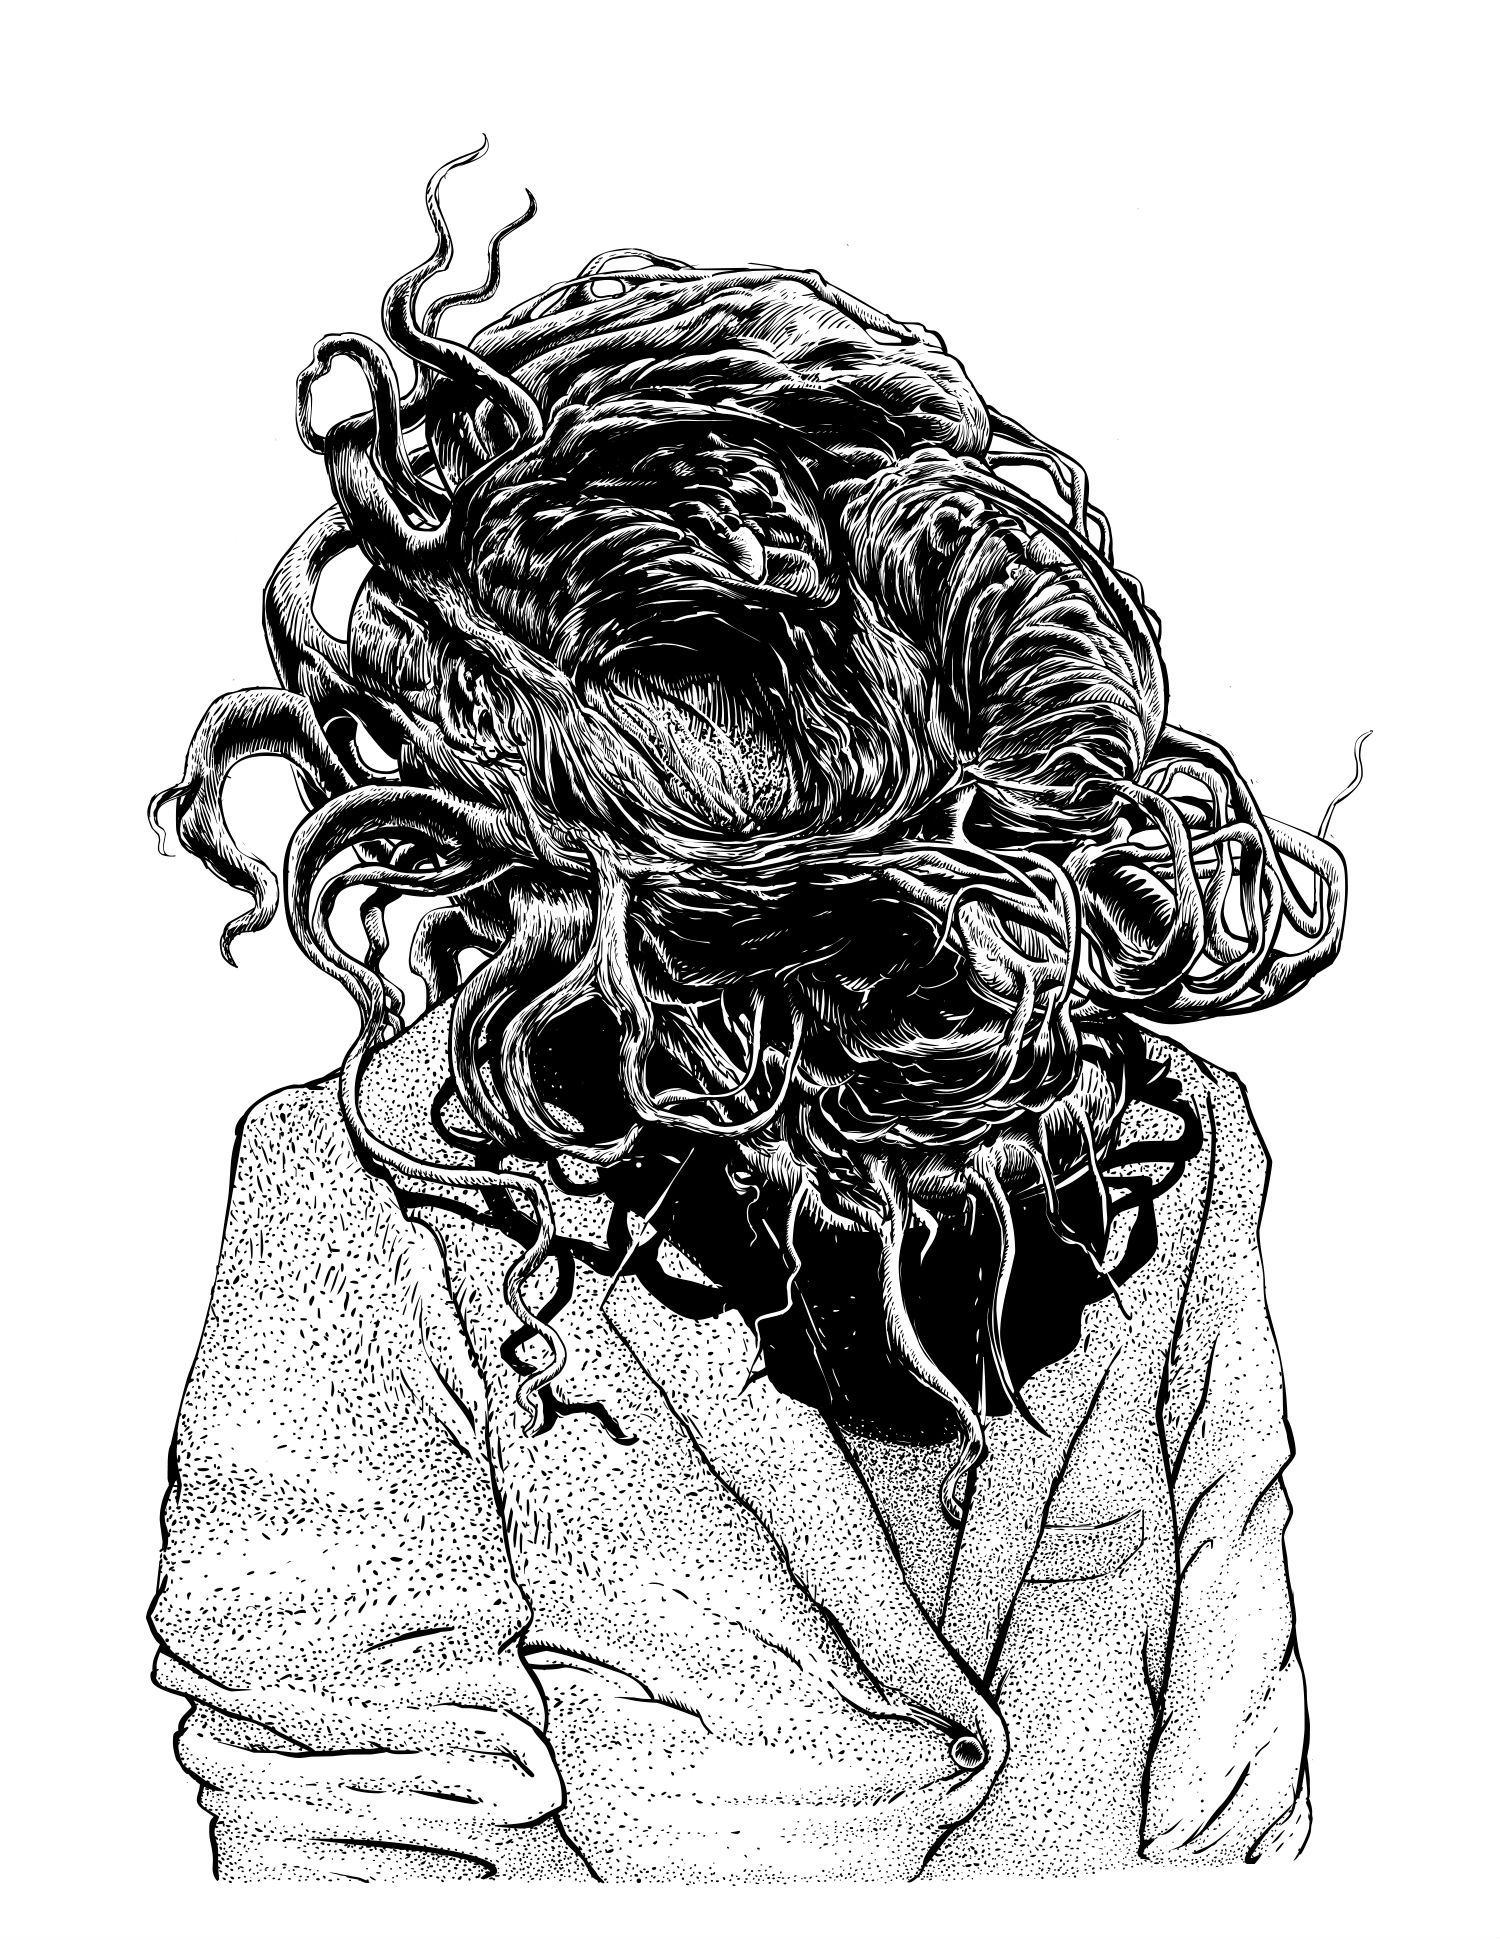 tomek plonka illustration surreal black white pencil portrait head mess